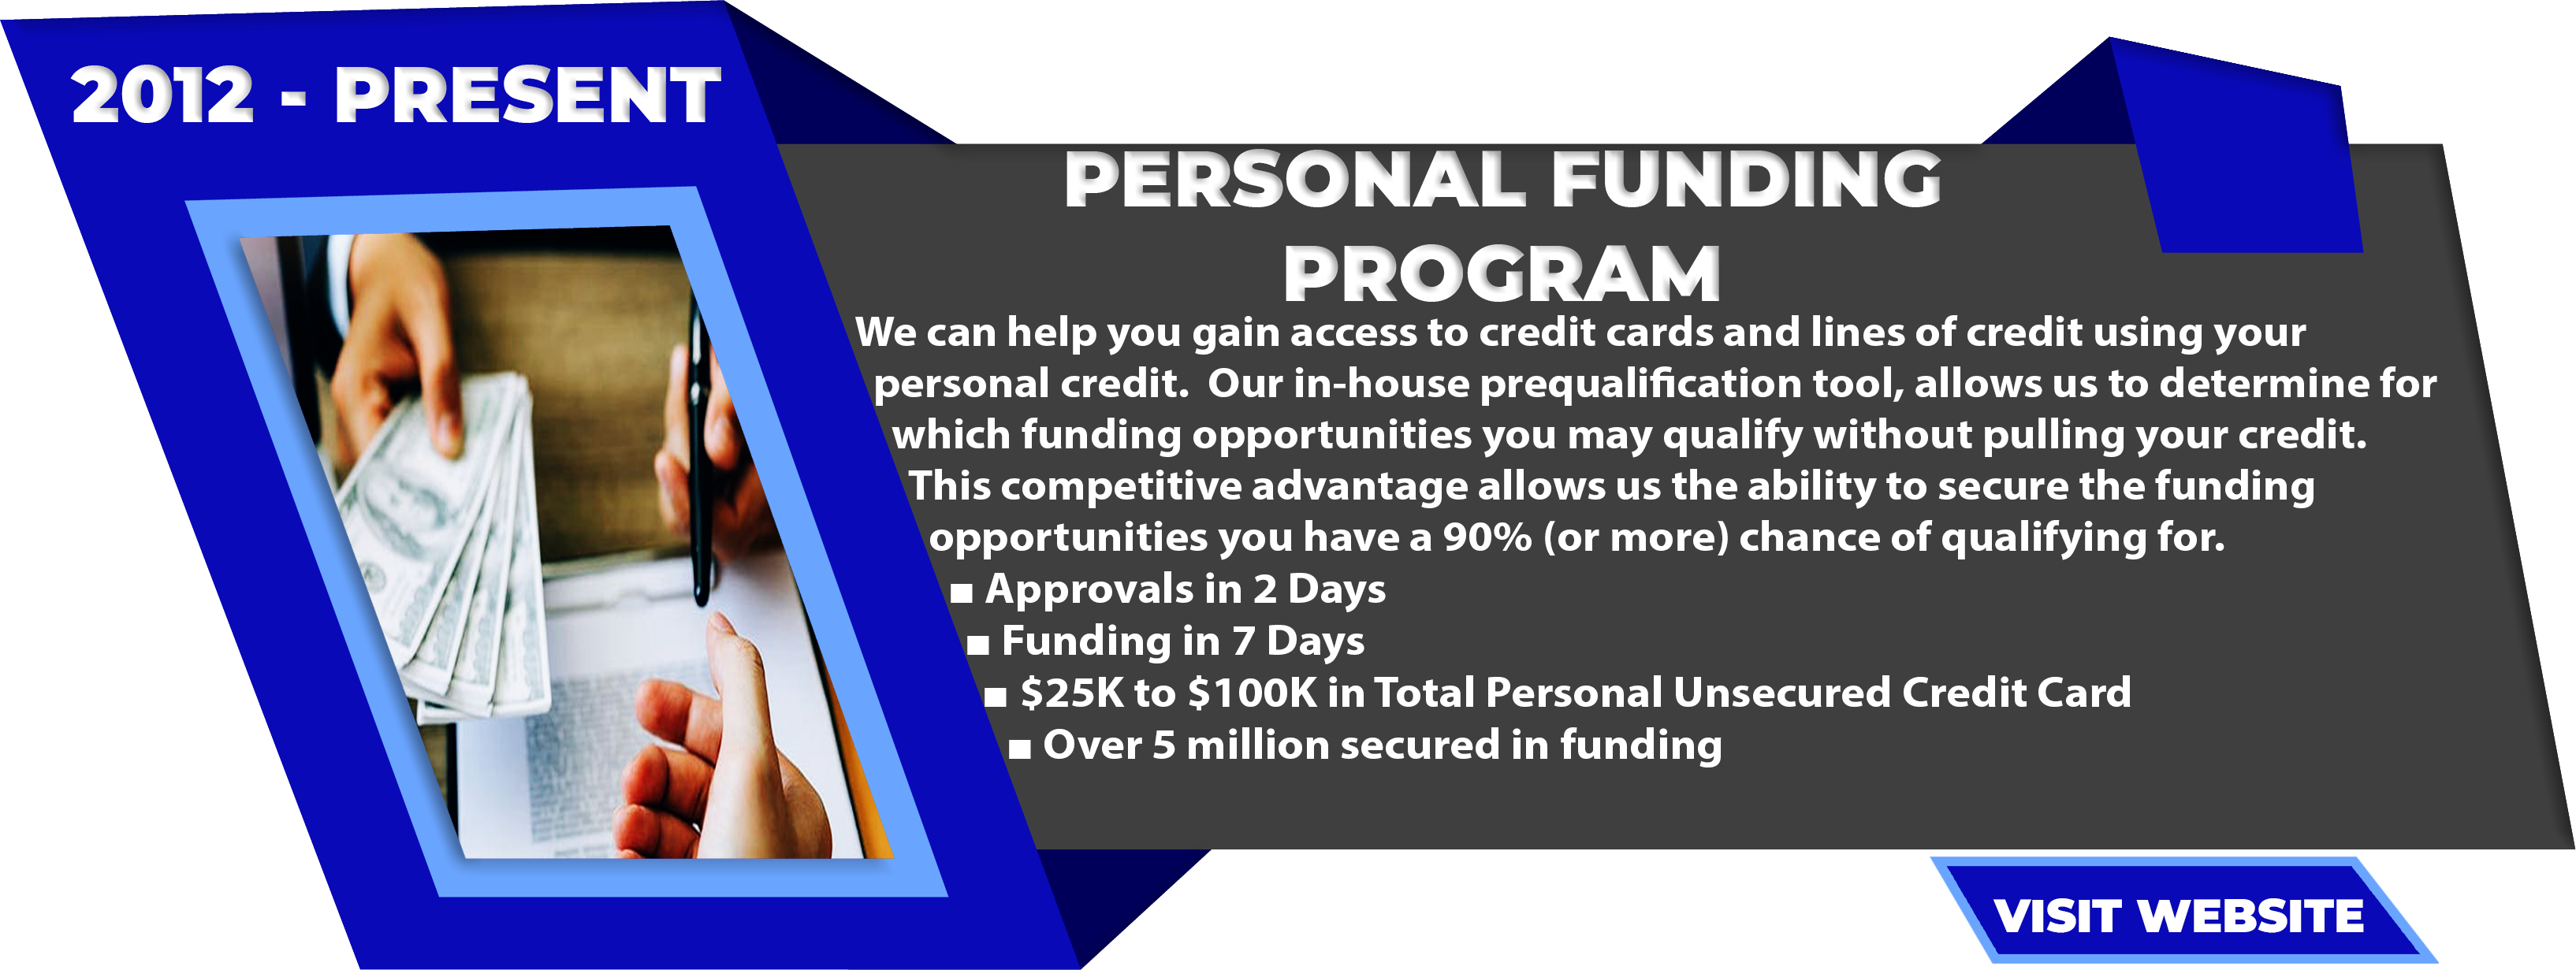 Personal-Funding-Program-2012-Present-1